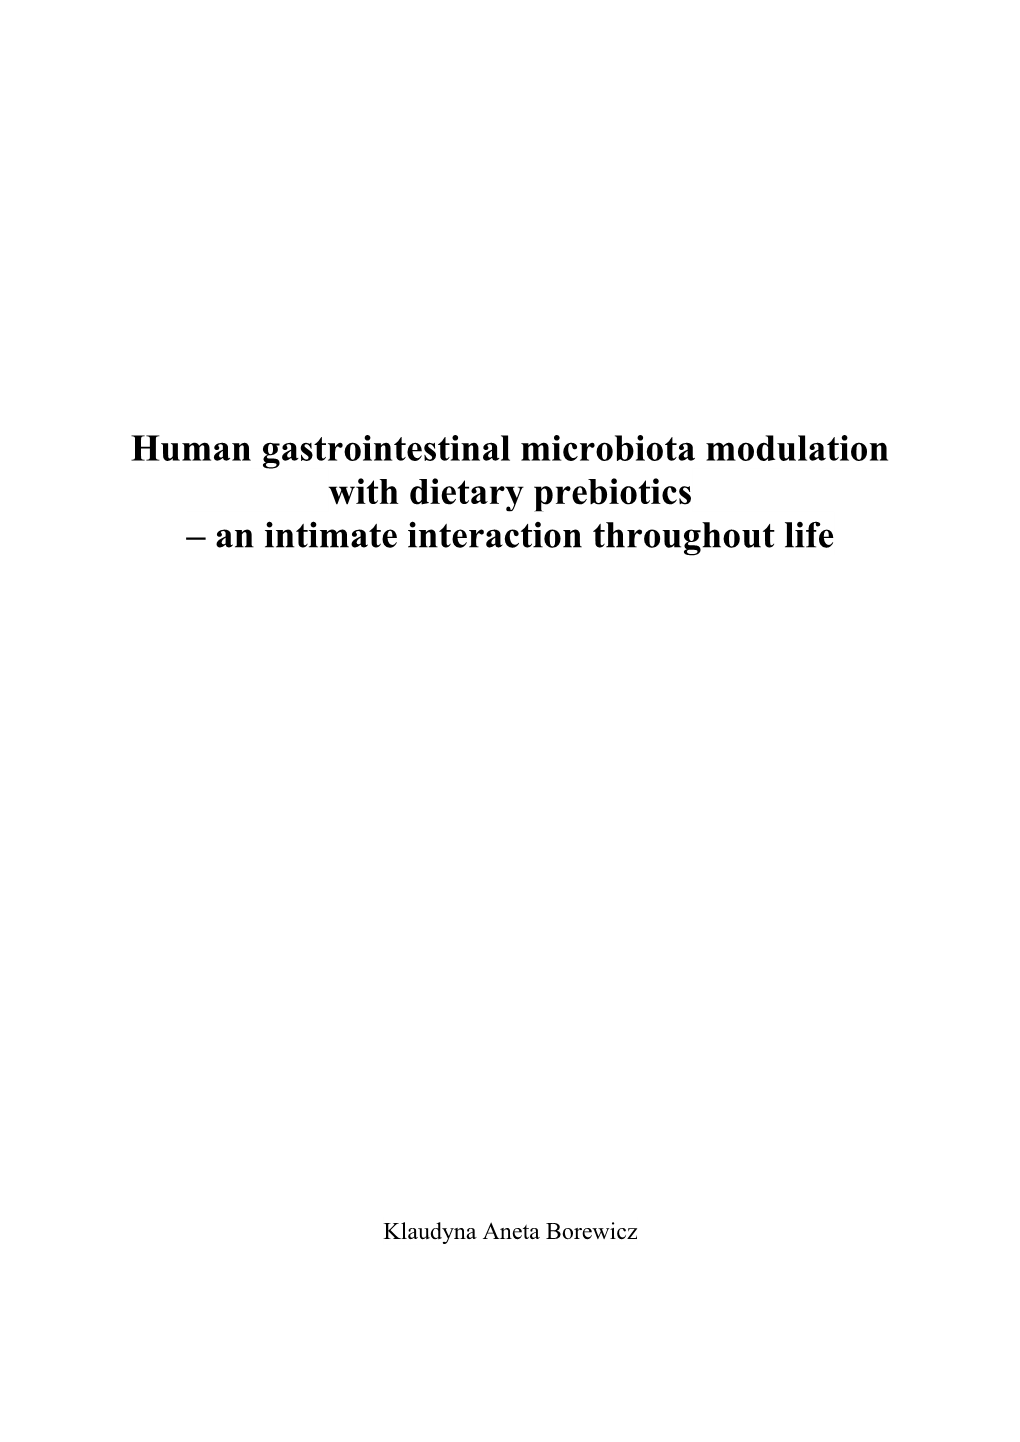 Human Gastrointestinal Microbiota Modulation with Dietary Prebiotics – an Intimate Interaction Throughout Life